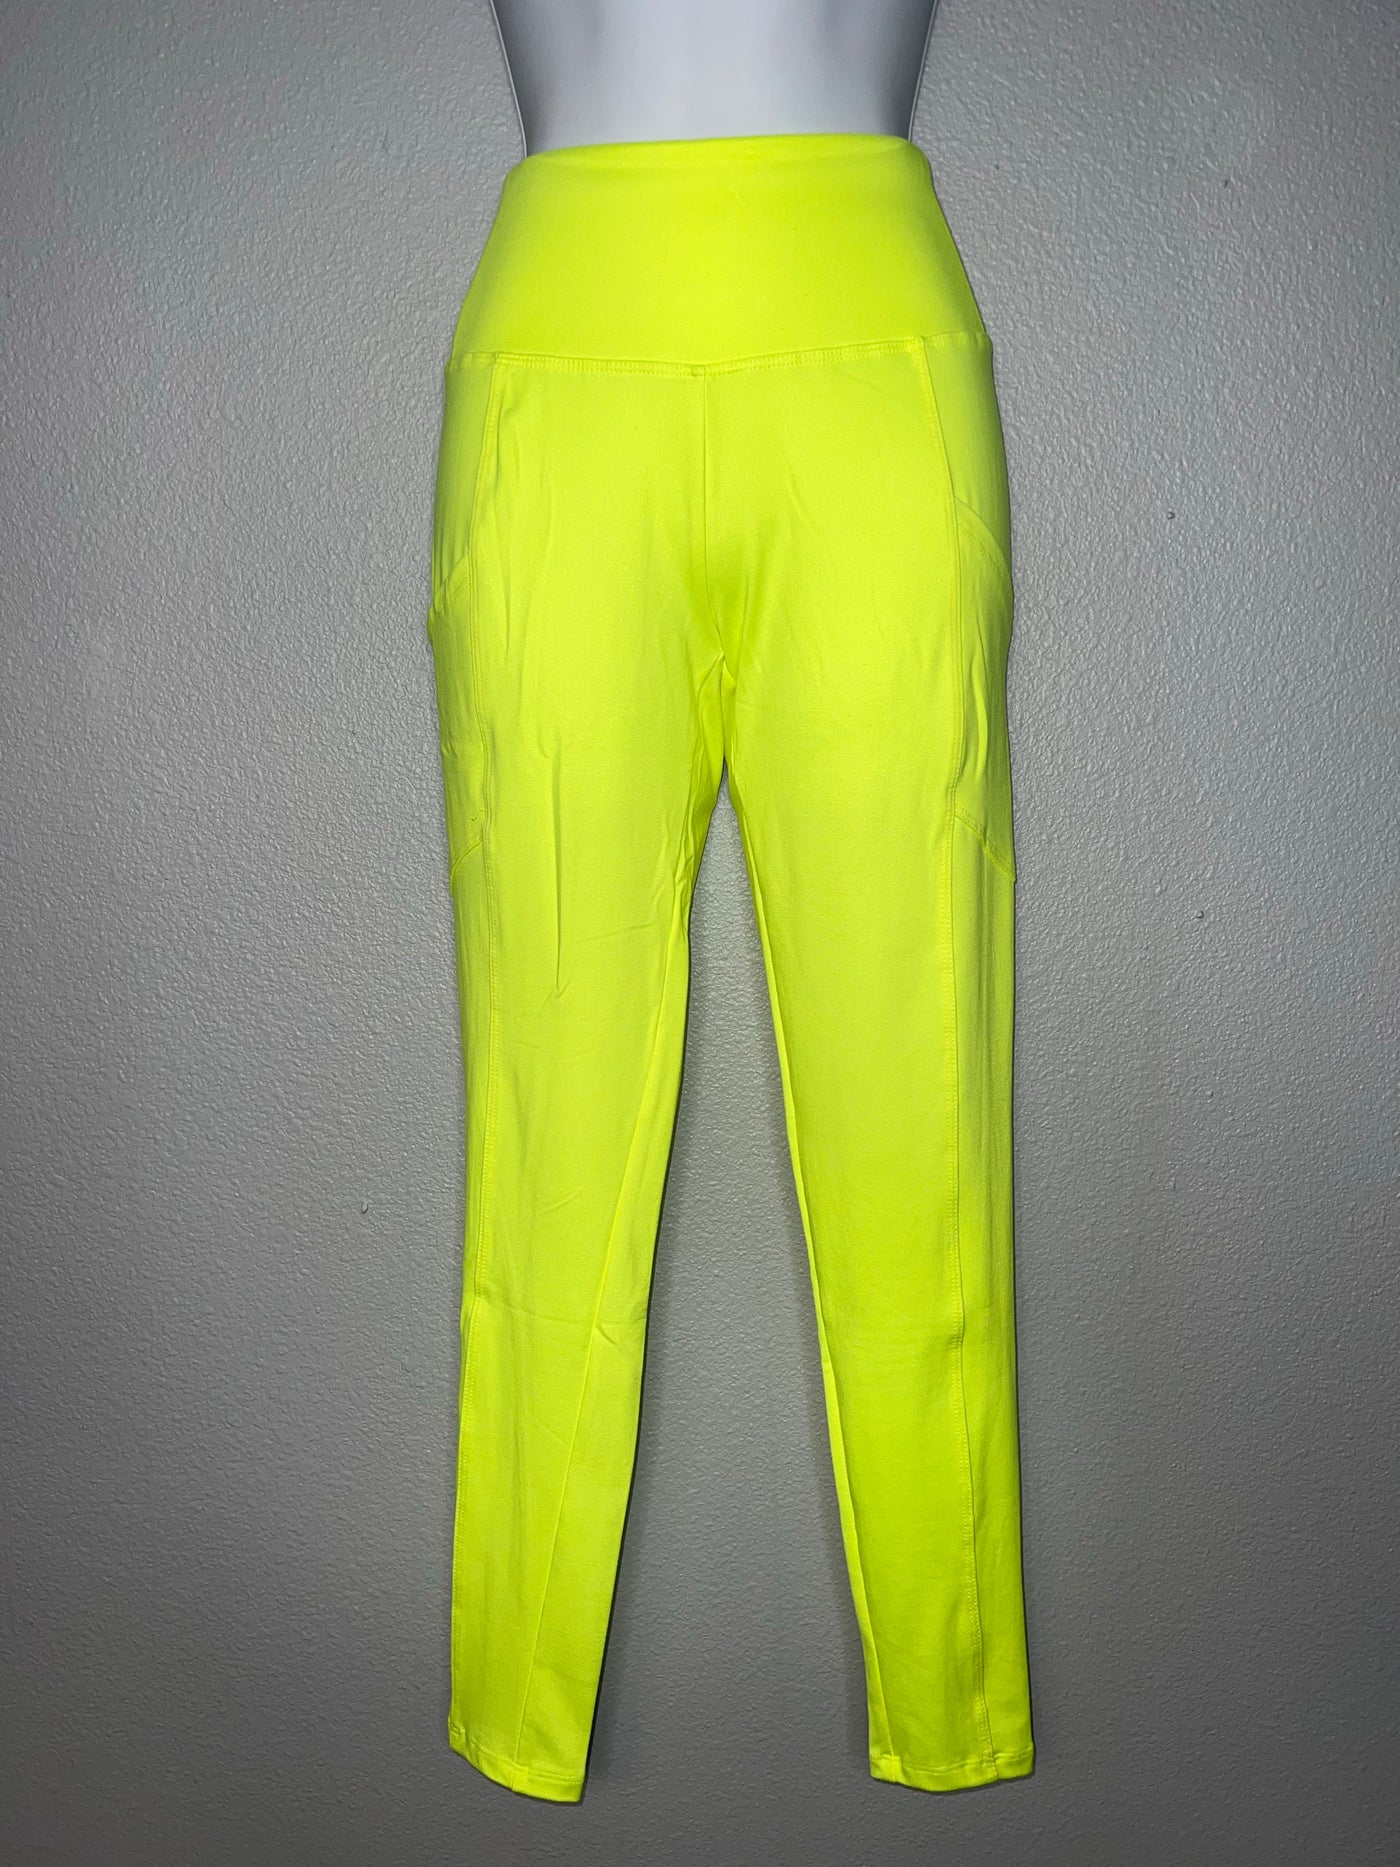 Neon Lime Leggings w/ Pockets